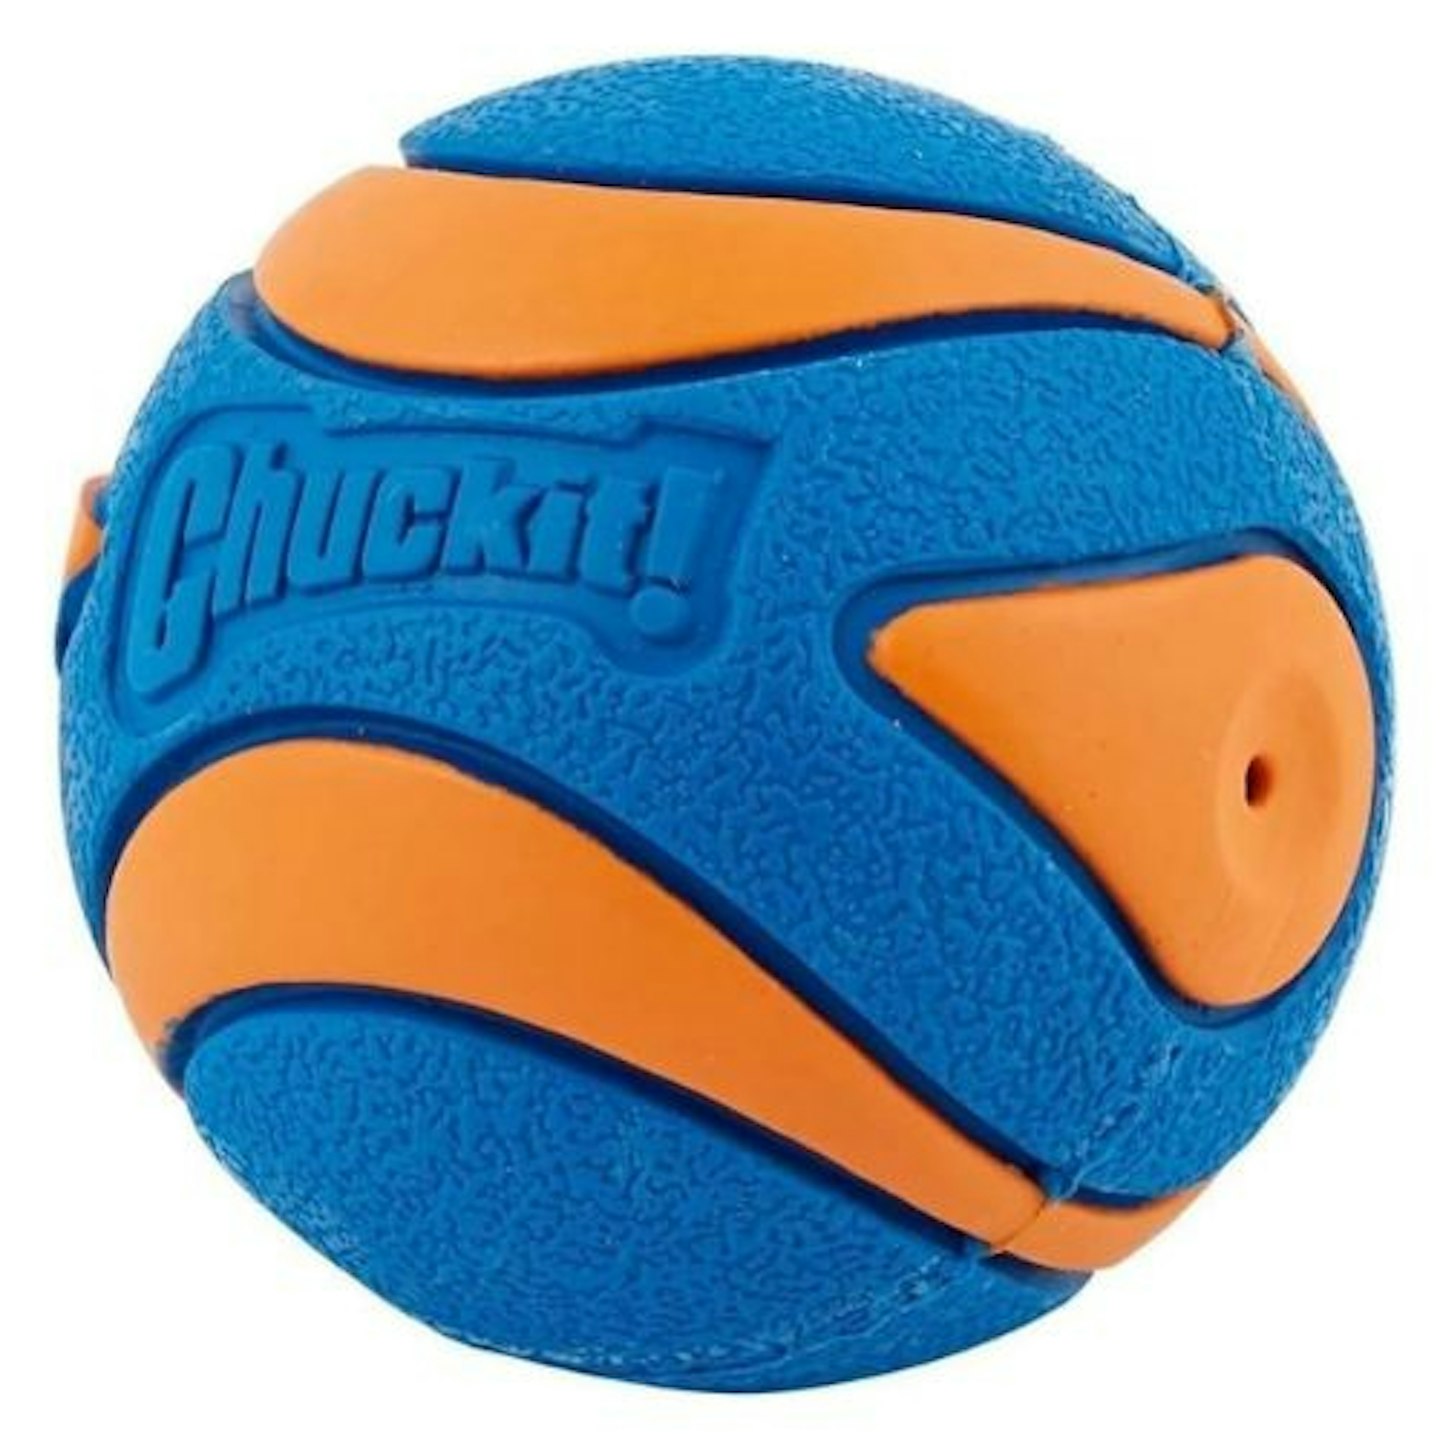 ChuckIt! Ultra Squeaker Ball Dog Toy